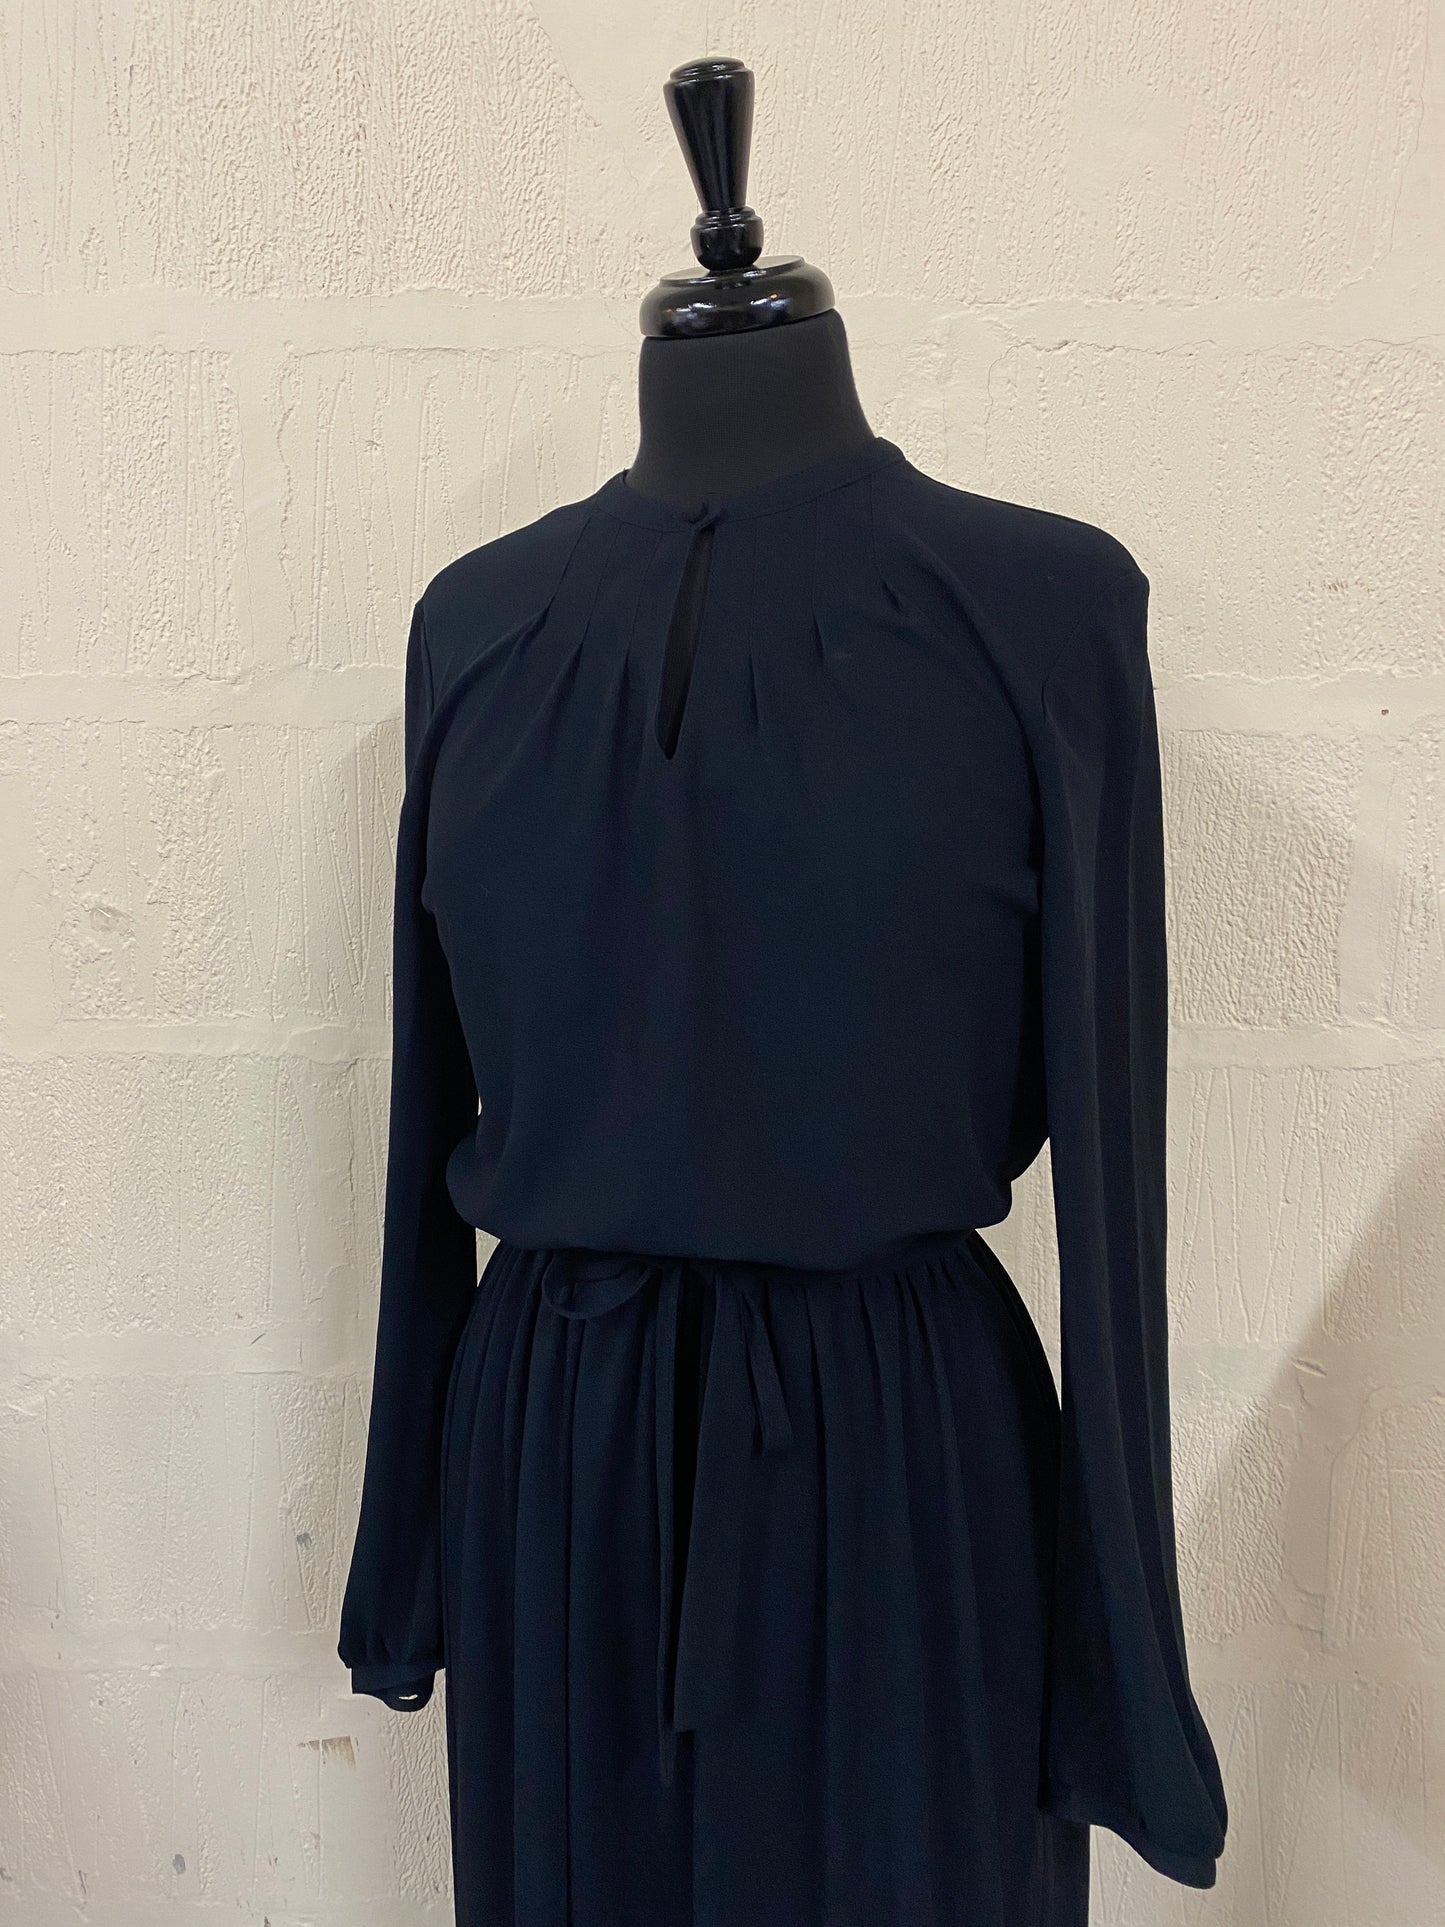 Vintage Black Long Sleeved Midi Dress Size 10-12